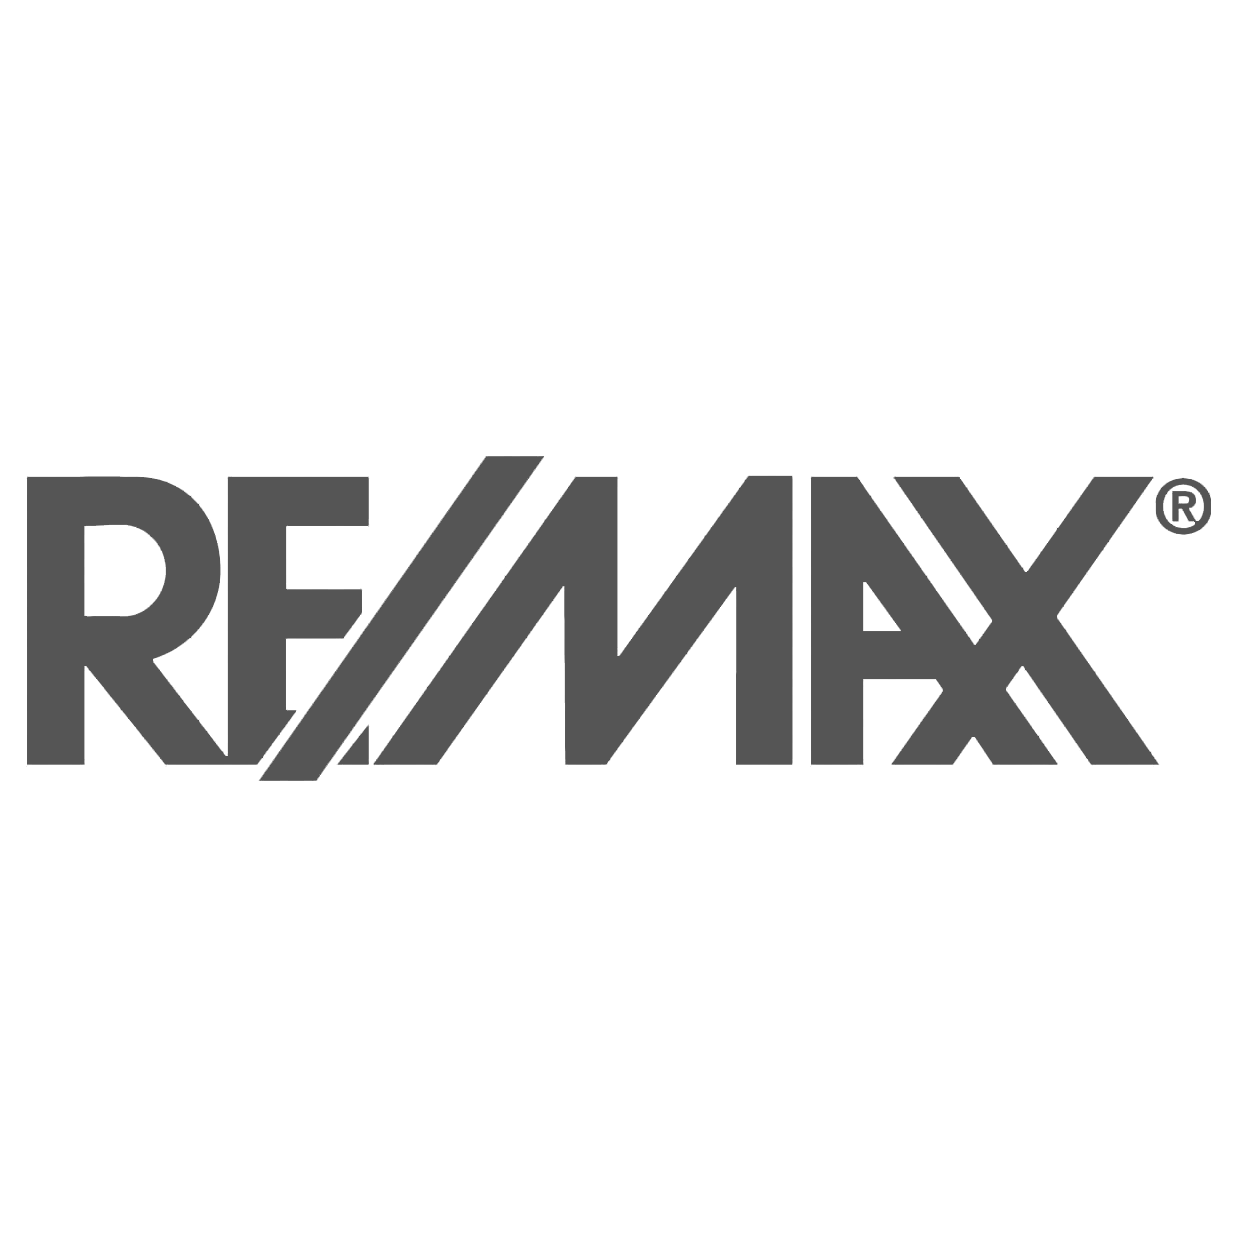 REMAX_Logotype_Color